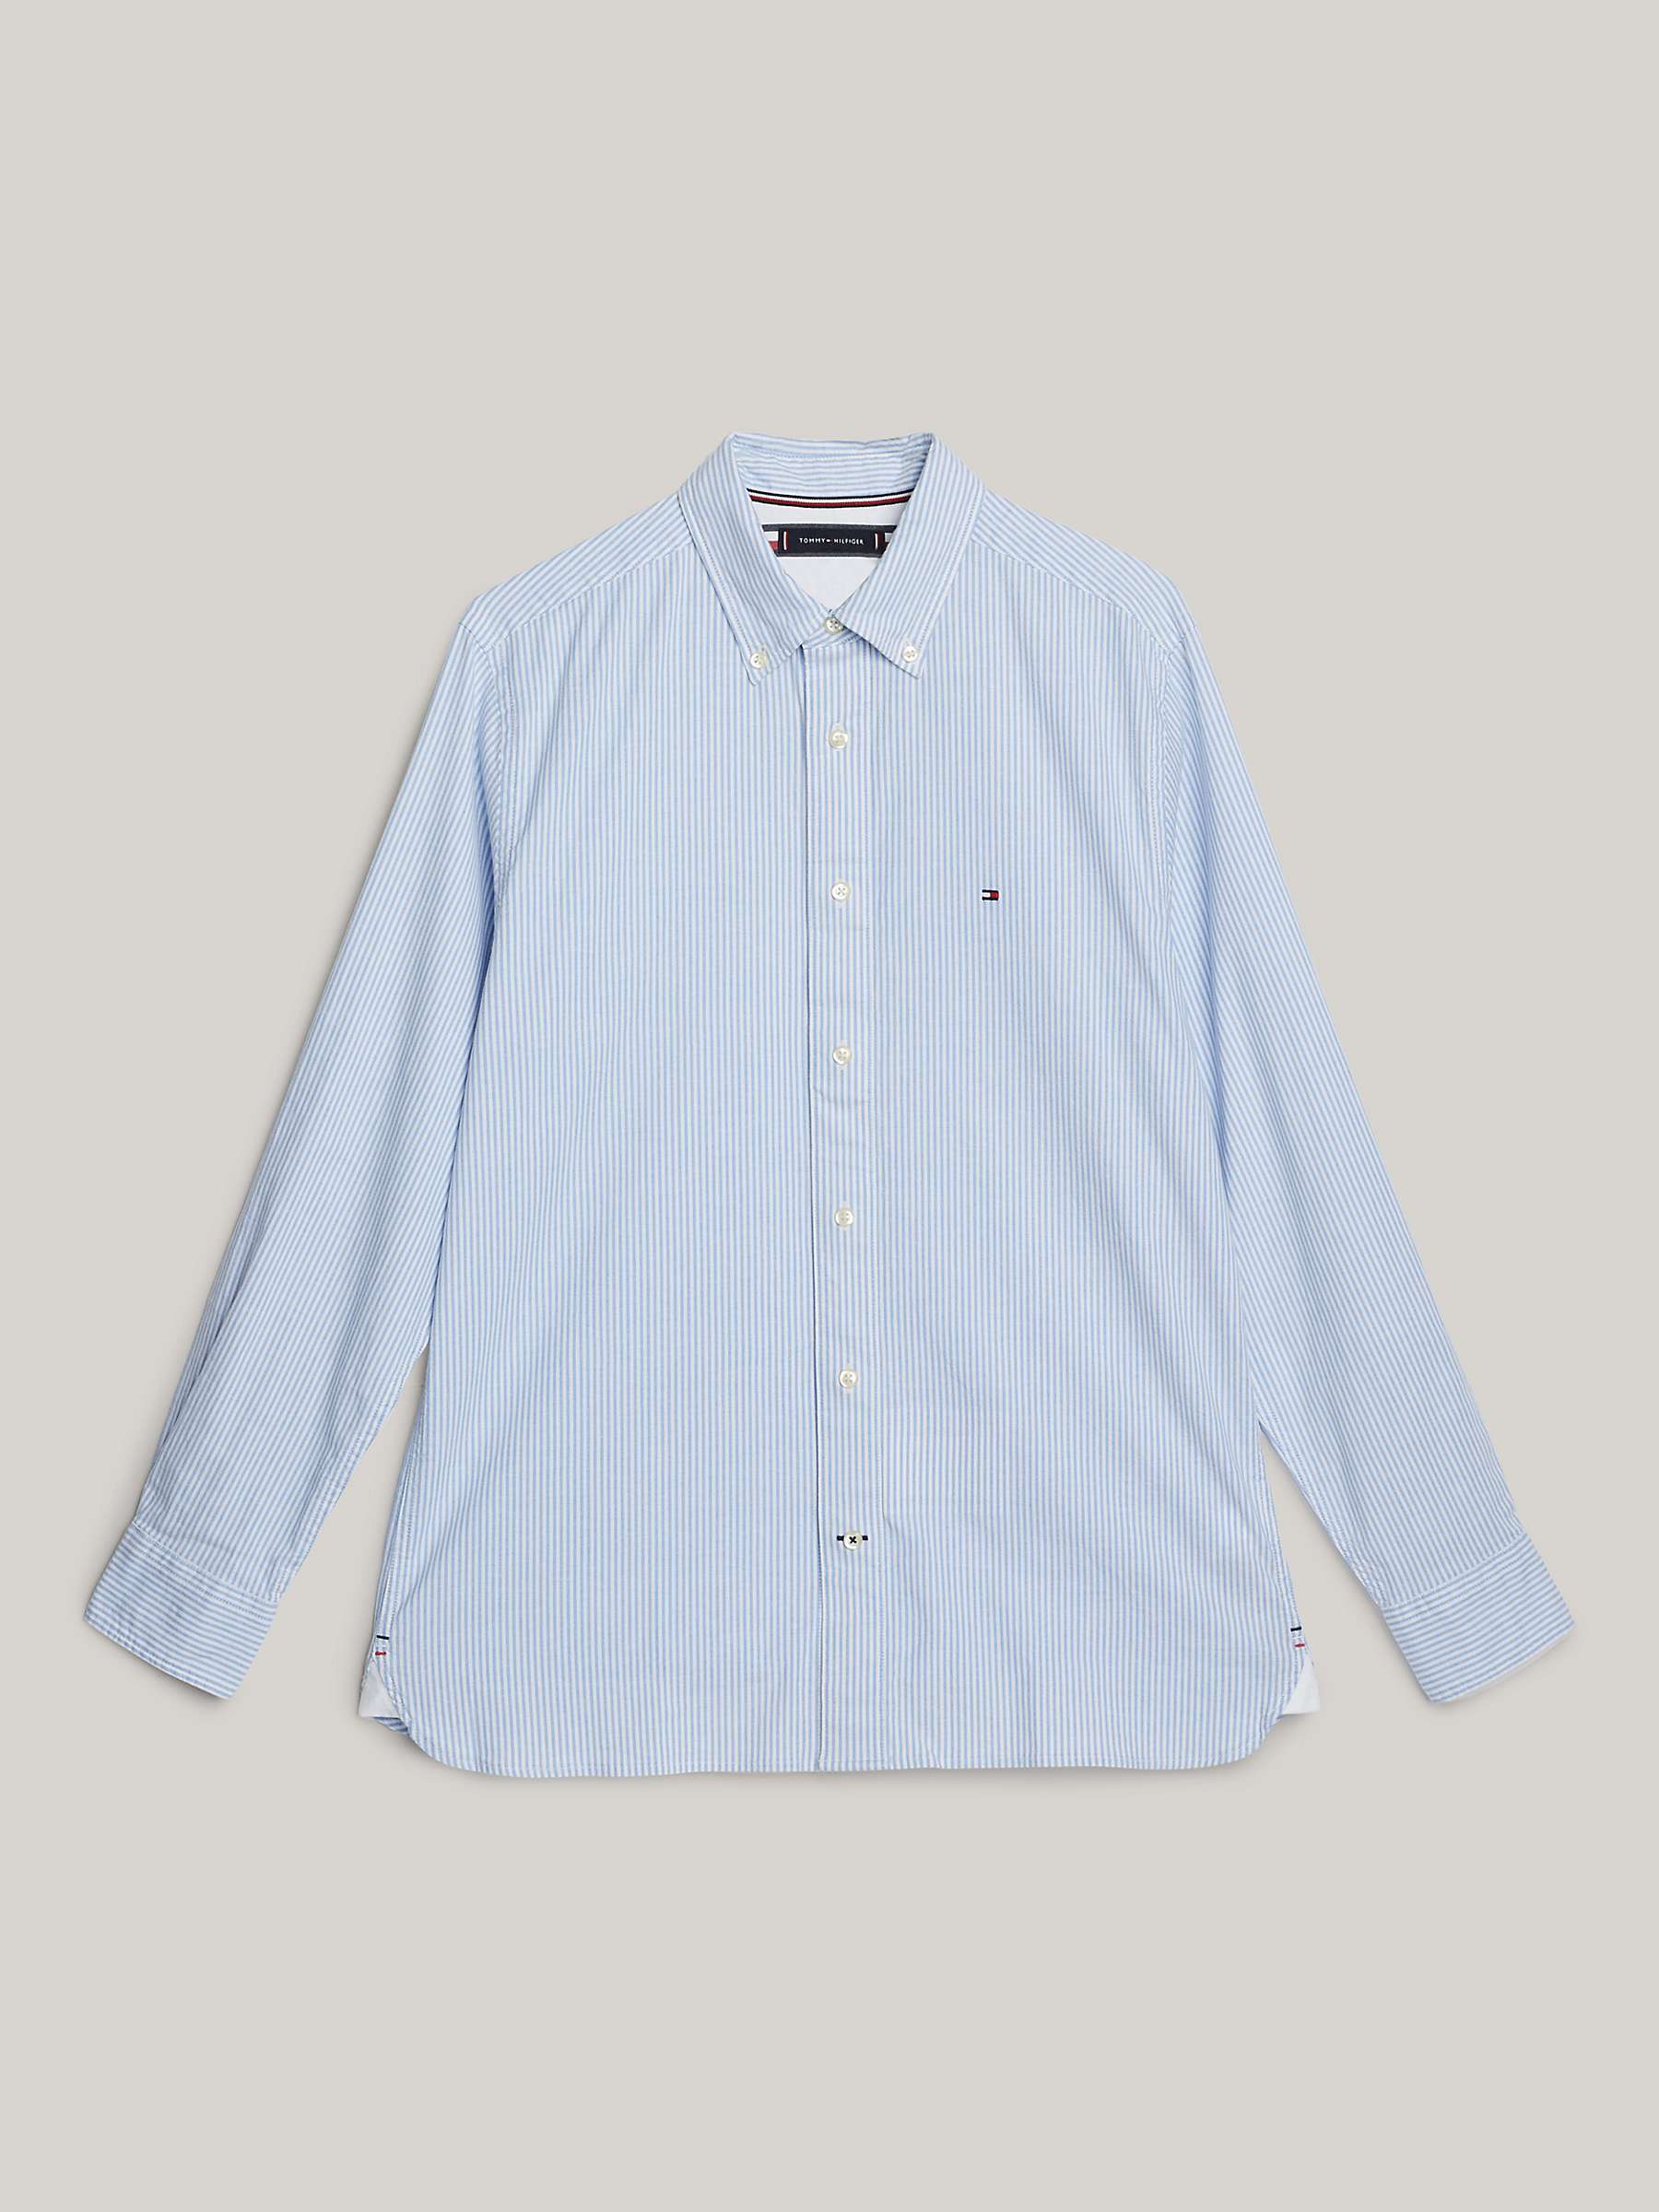 Buy Tommy Hilfiger Adaptive Organic Cotton Blend Striped Shirt, Blue/White Online at johnlewis.com